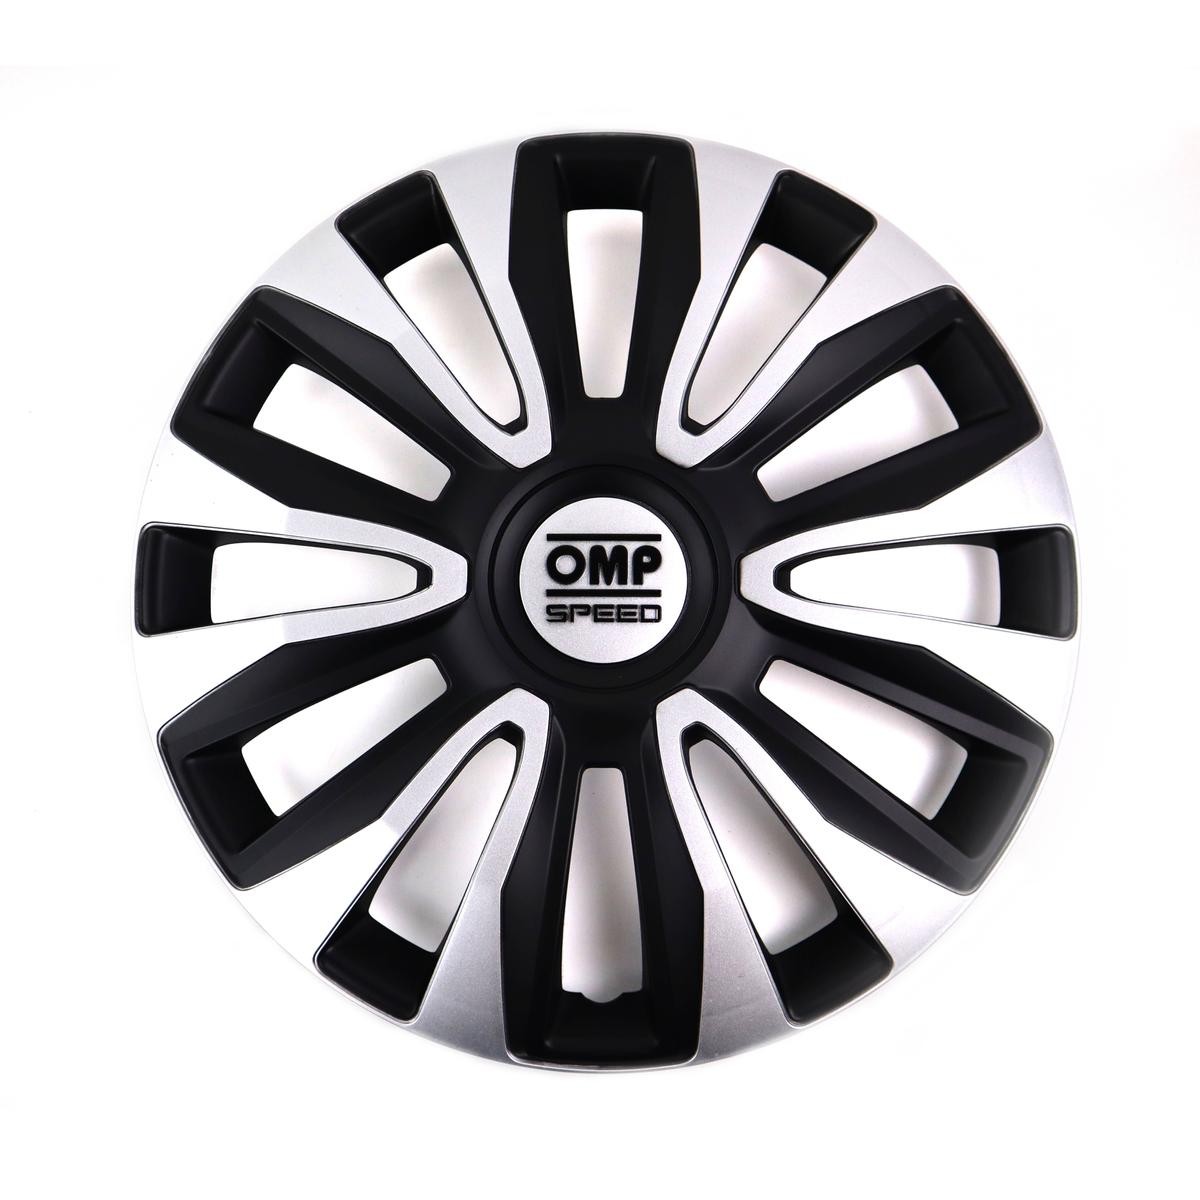 OMP OMPS07011412 Car wheel trims OPEL Corsa D Hatchback (S07) 14 Inch black, silver